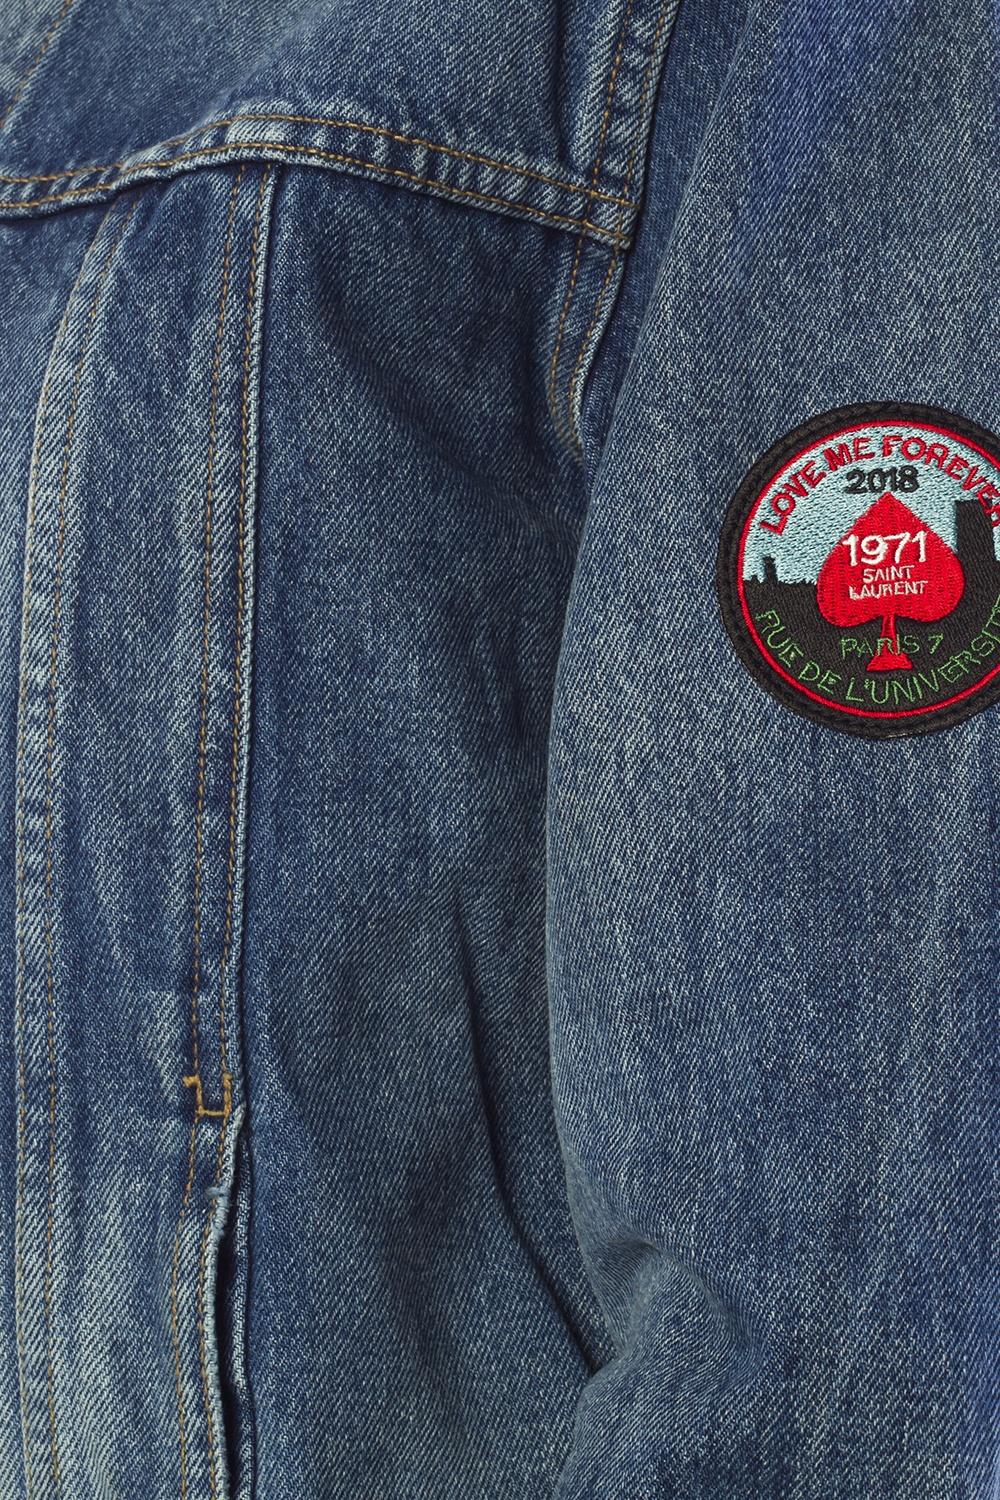 Saint Laurent Blue Jean Denim Jacket with Embroidered Badge Size Large For Sale 2